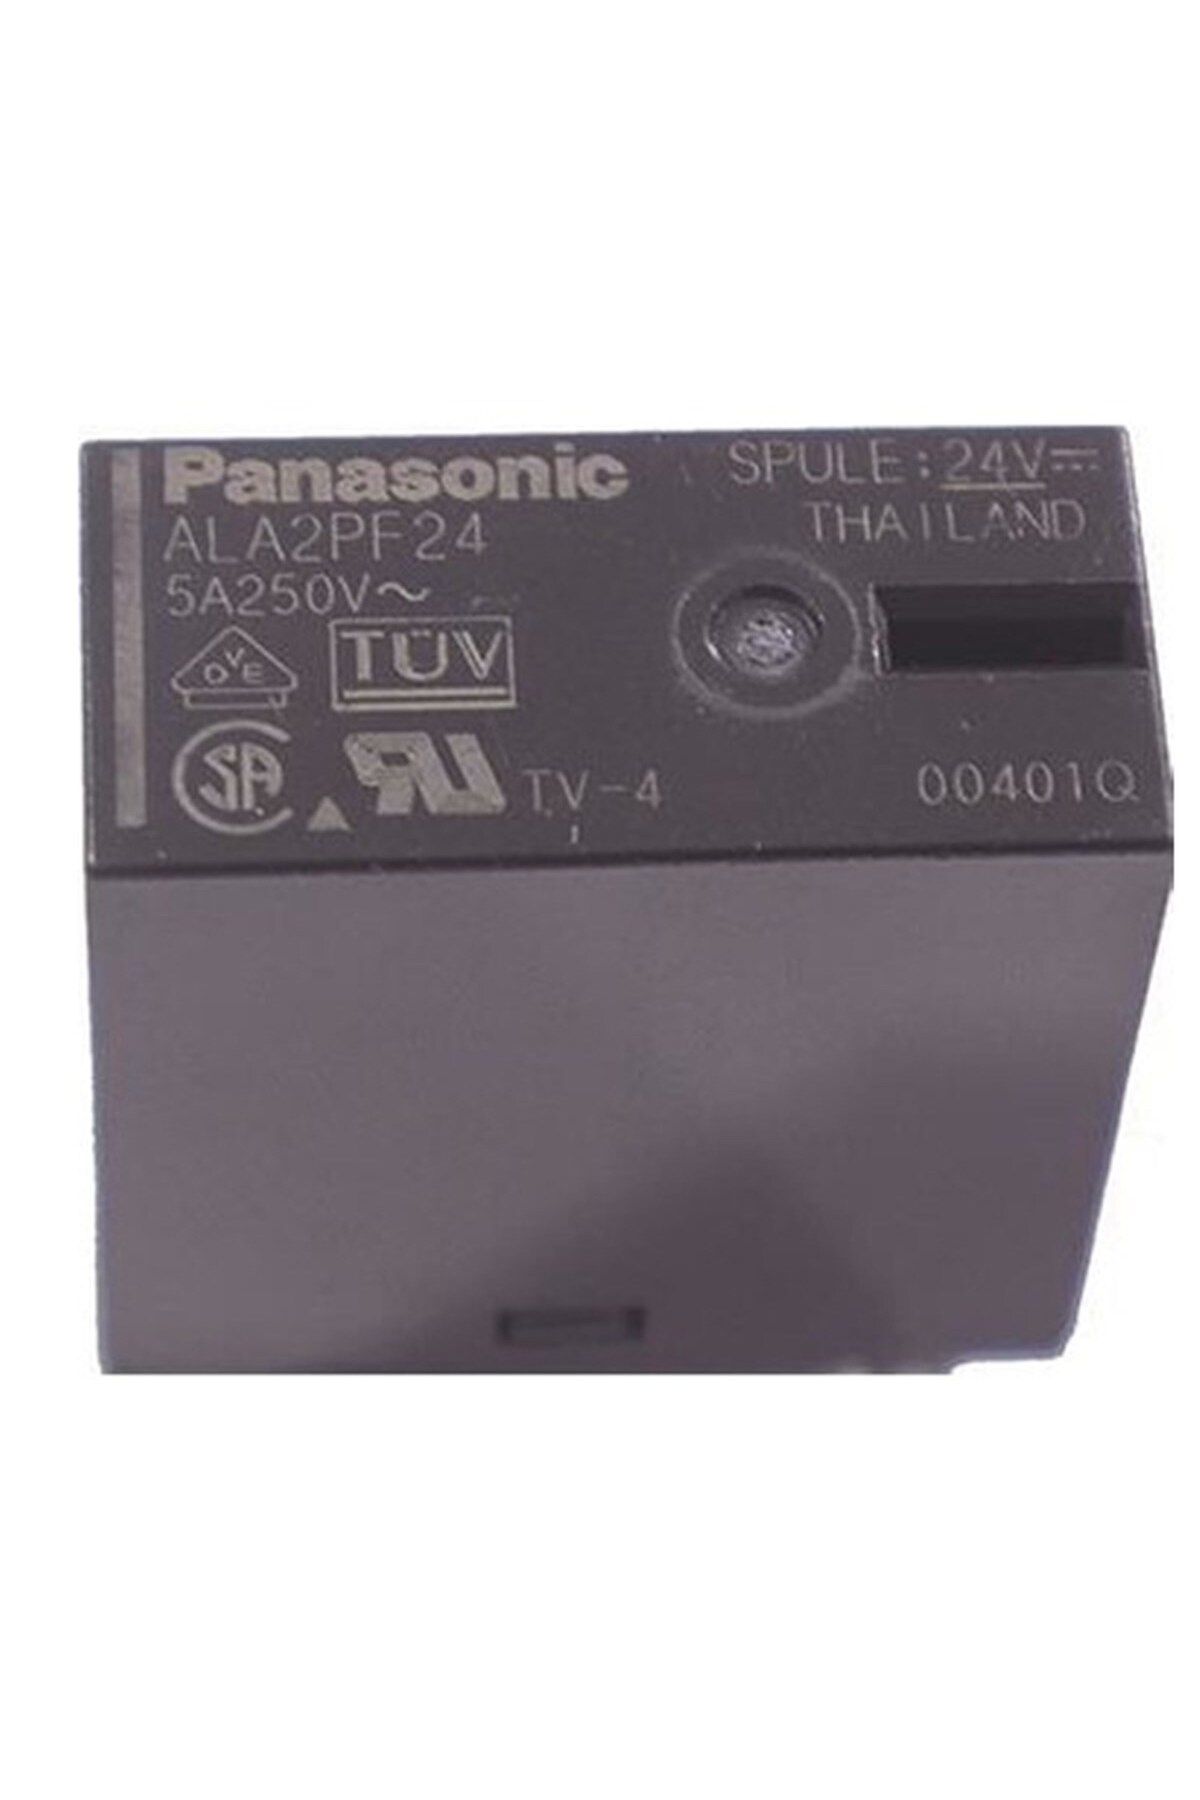 Panasonic Role Kombi Için 024-2hs 5a24v 250watt 6 Pın